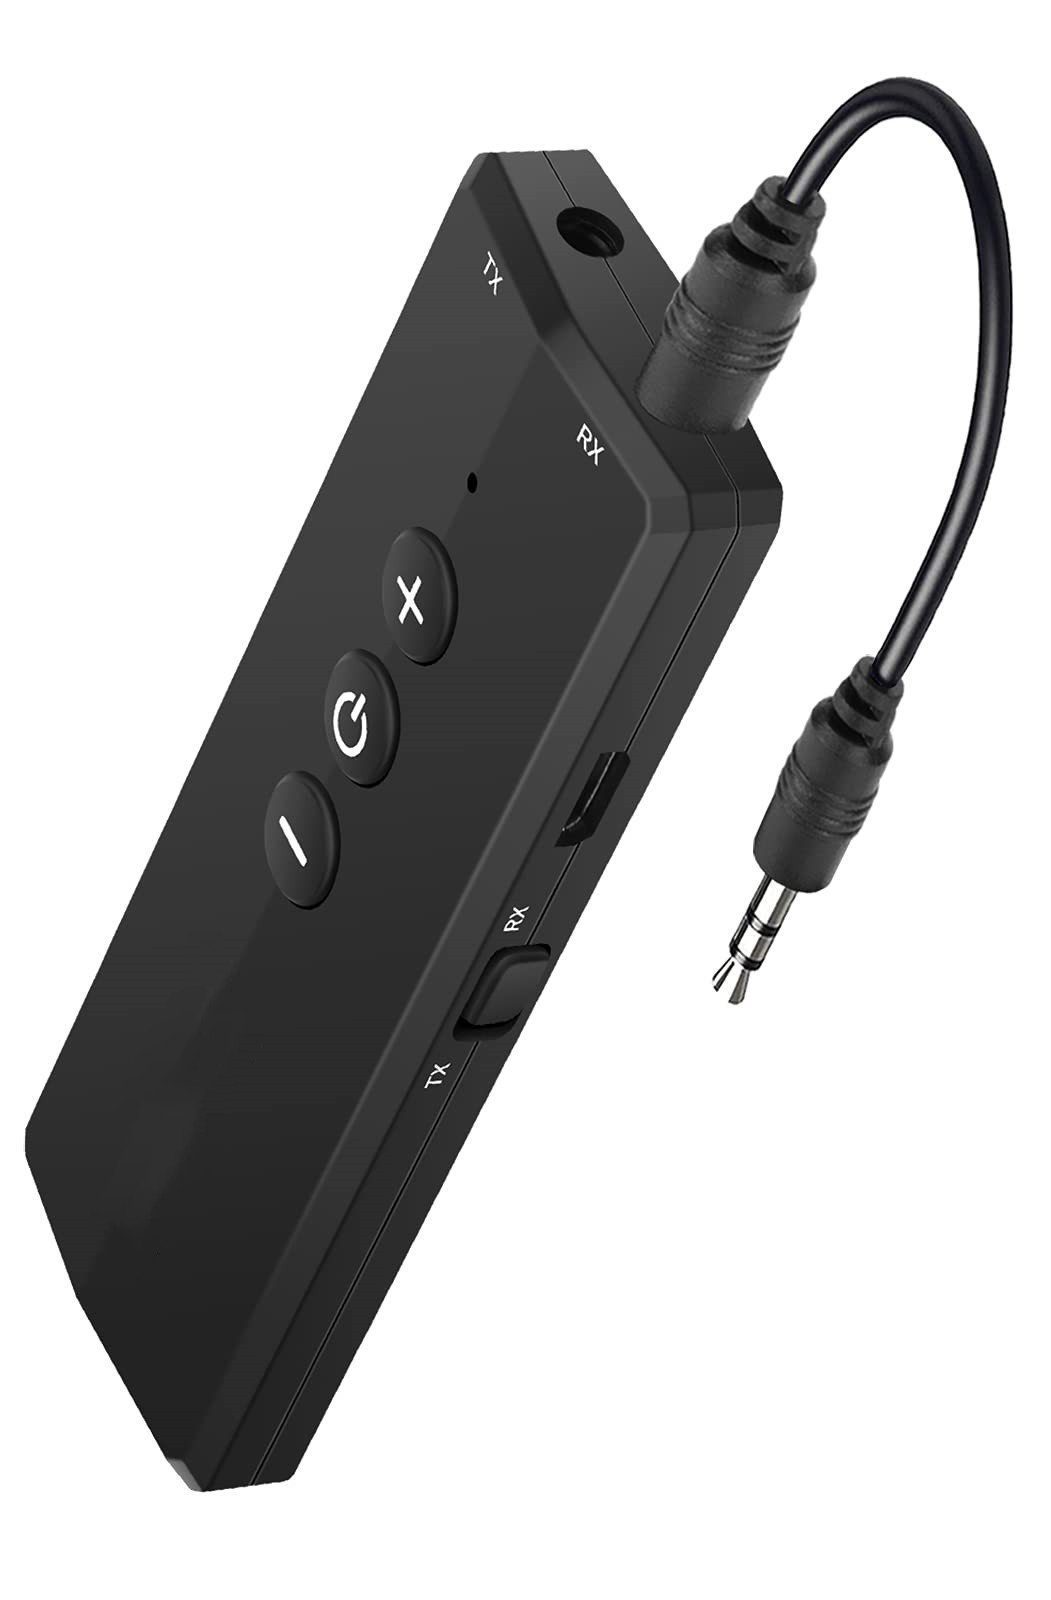 Housruse Bluetooth-Adapter, kabelloser Audio-Transceiver mit 3,5-mm-Kabel  für Kopfhörer, Stereolautsprecher Bluetooth-Adapter